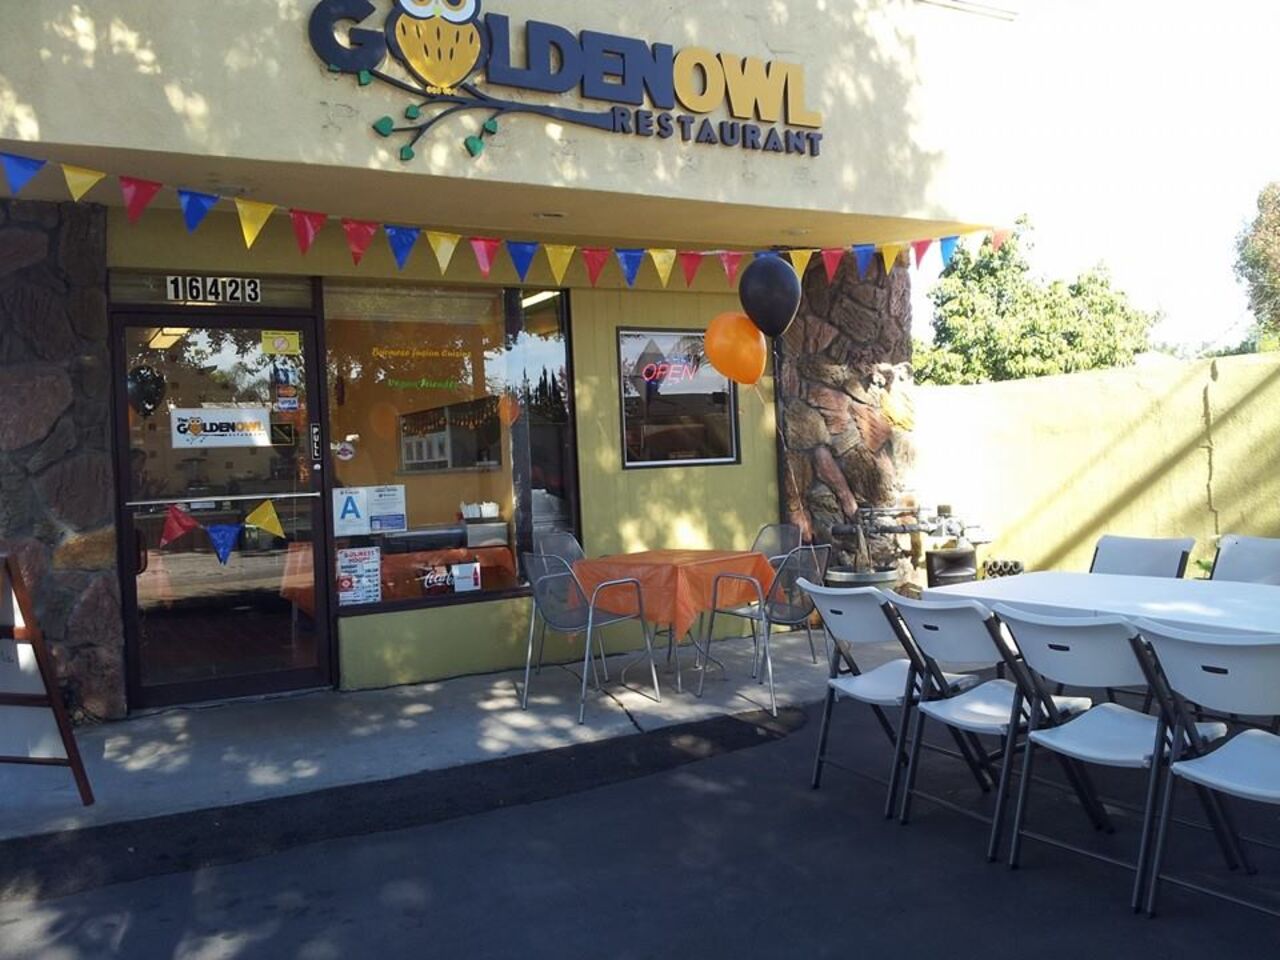 A photo of The Golden Owl Restaurant